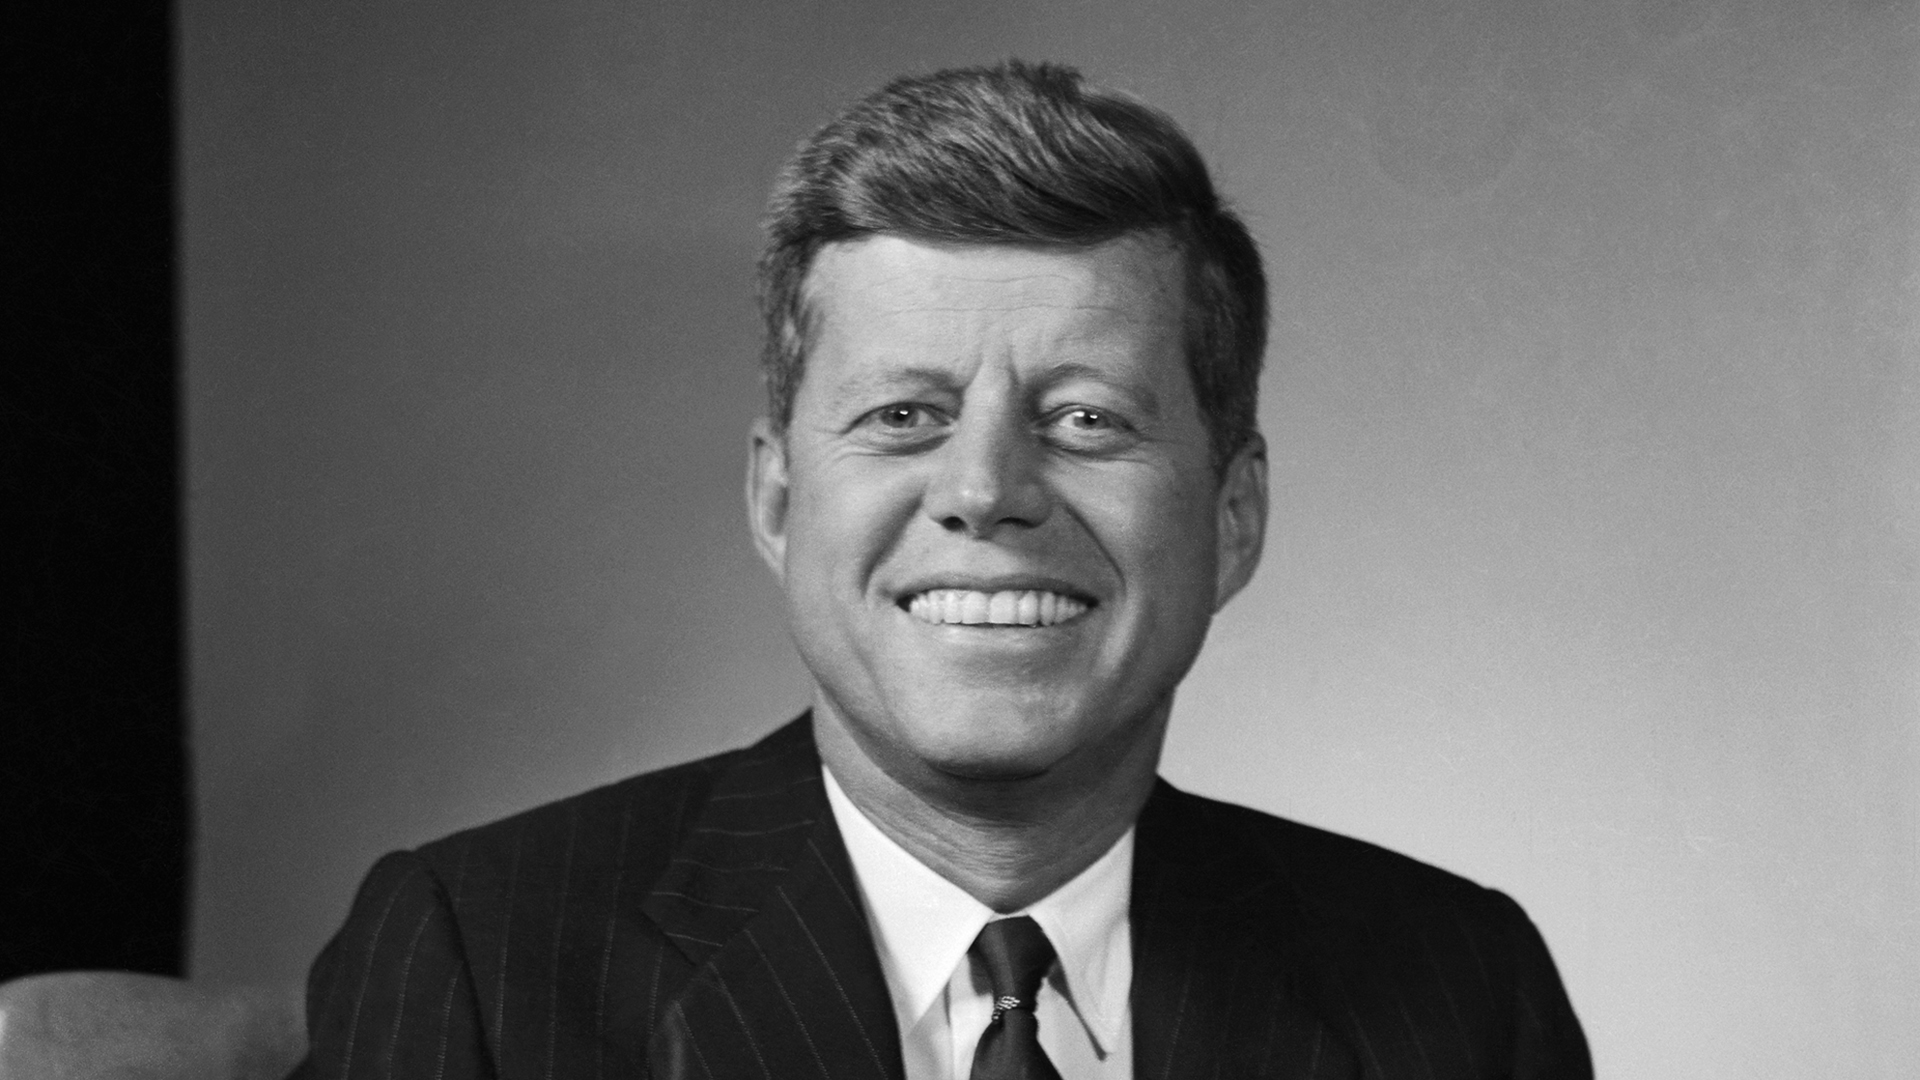 Marking 60th anniversary of John F. Kennedy's assassination